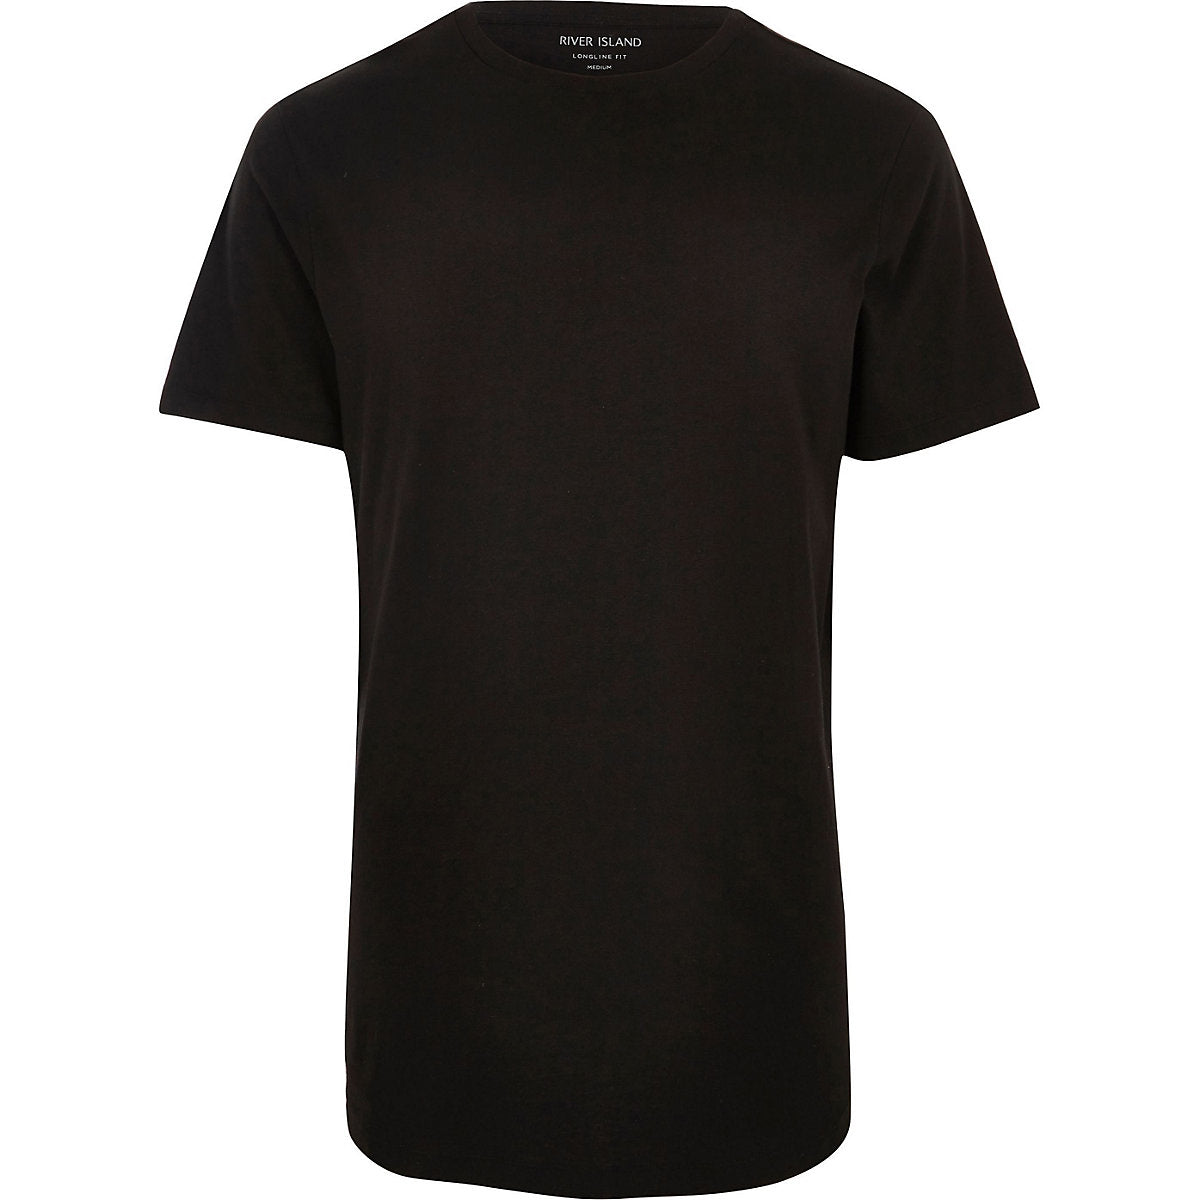 River Island Black curved hem longline t-shirt